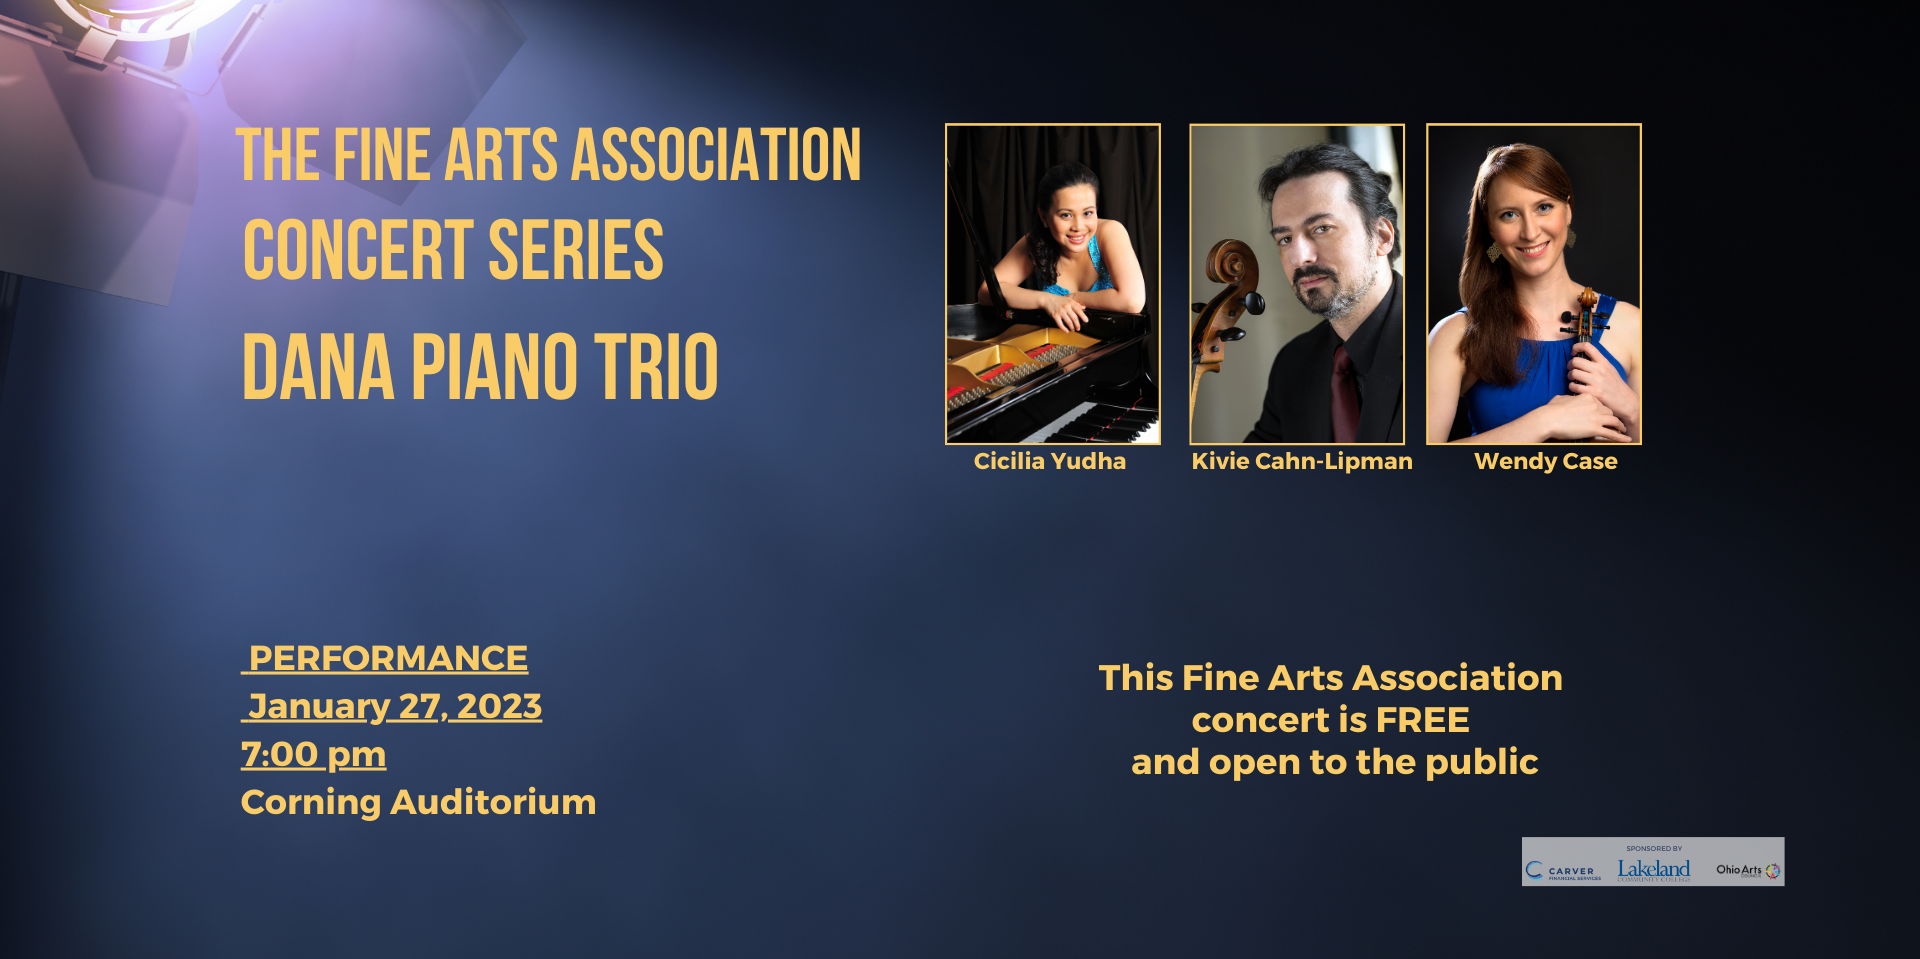 The Dana Piano Trio promotional image